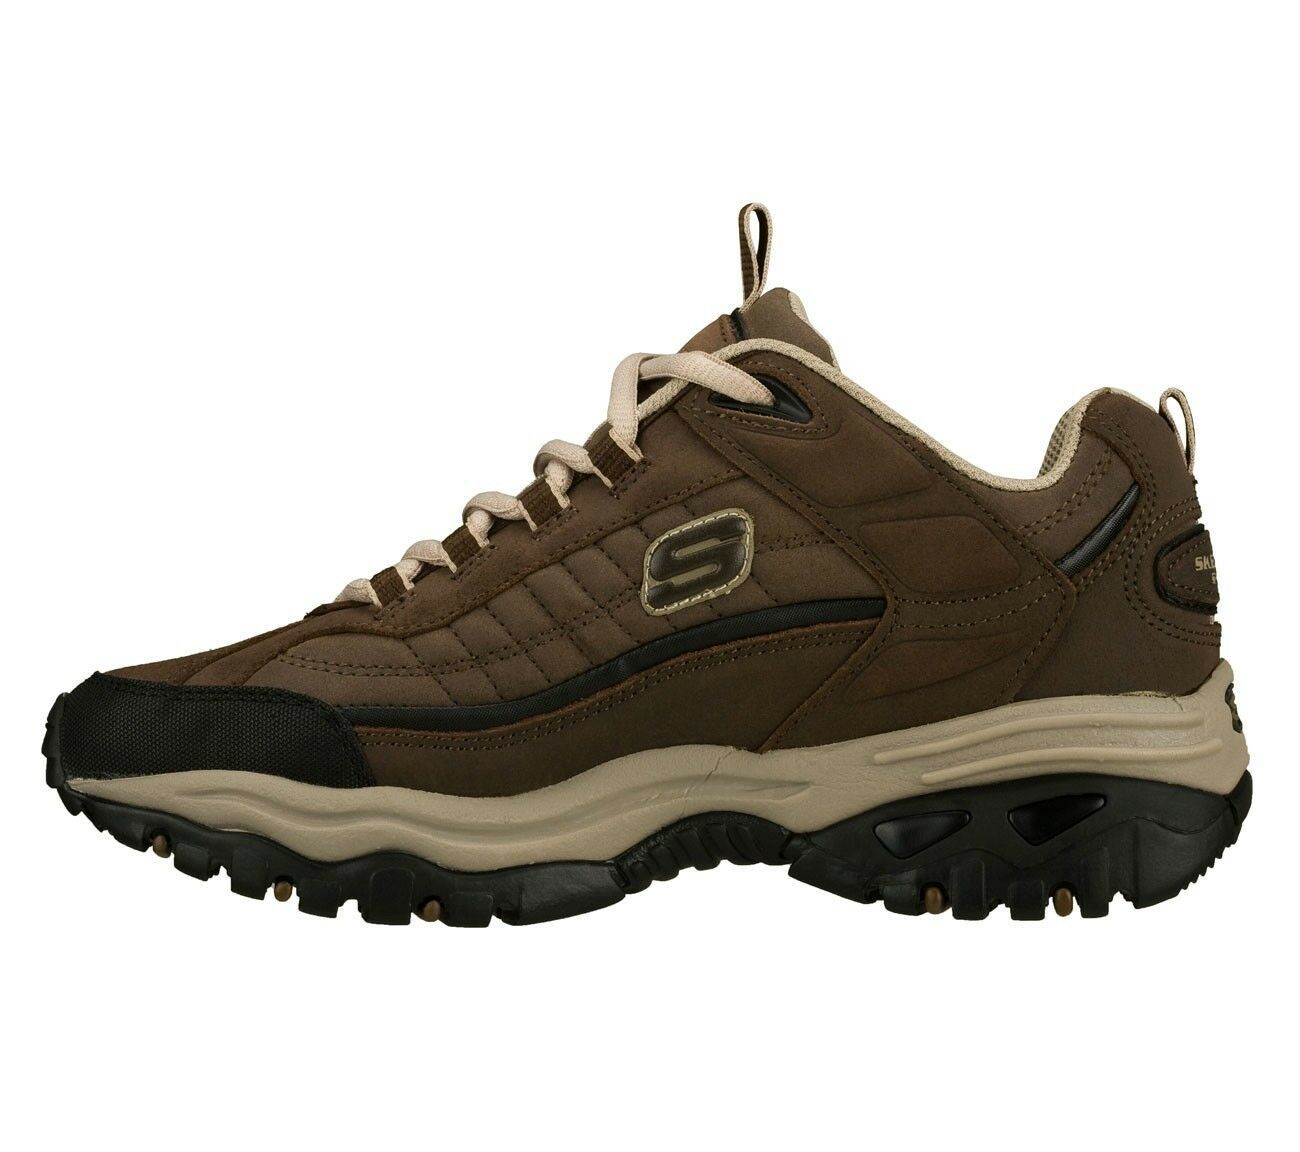 Skechers EW Wide Width Brown shoes Men's Sport Casual Soft Leather ...